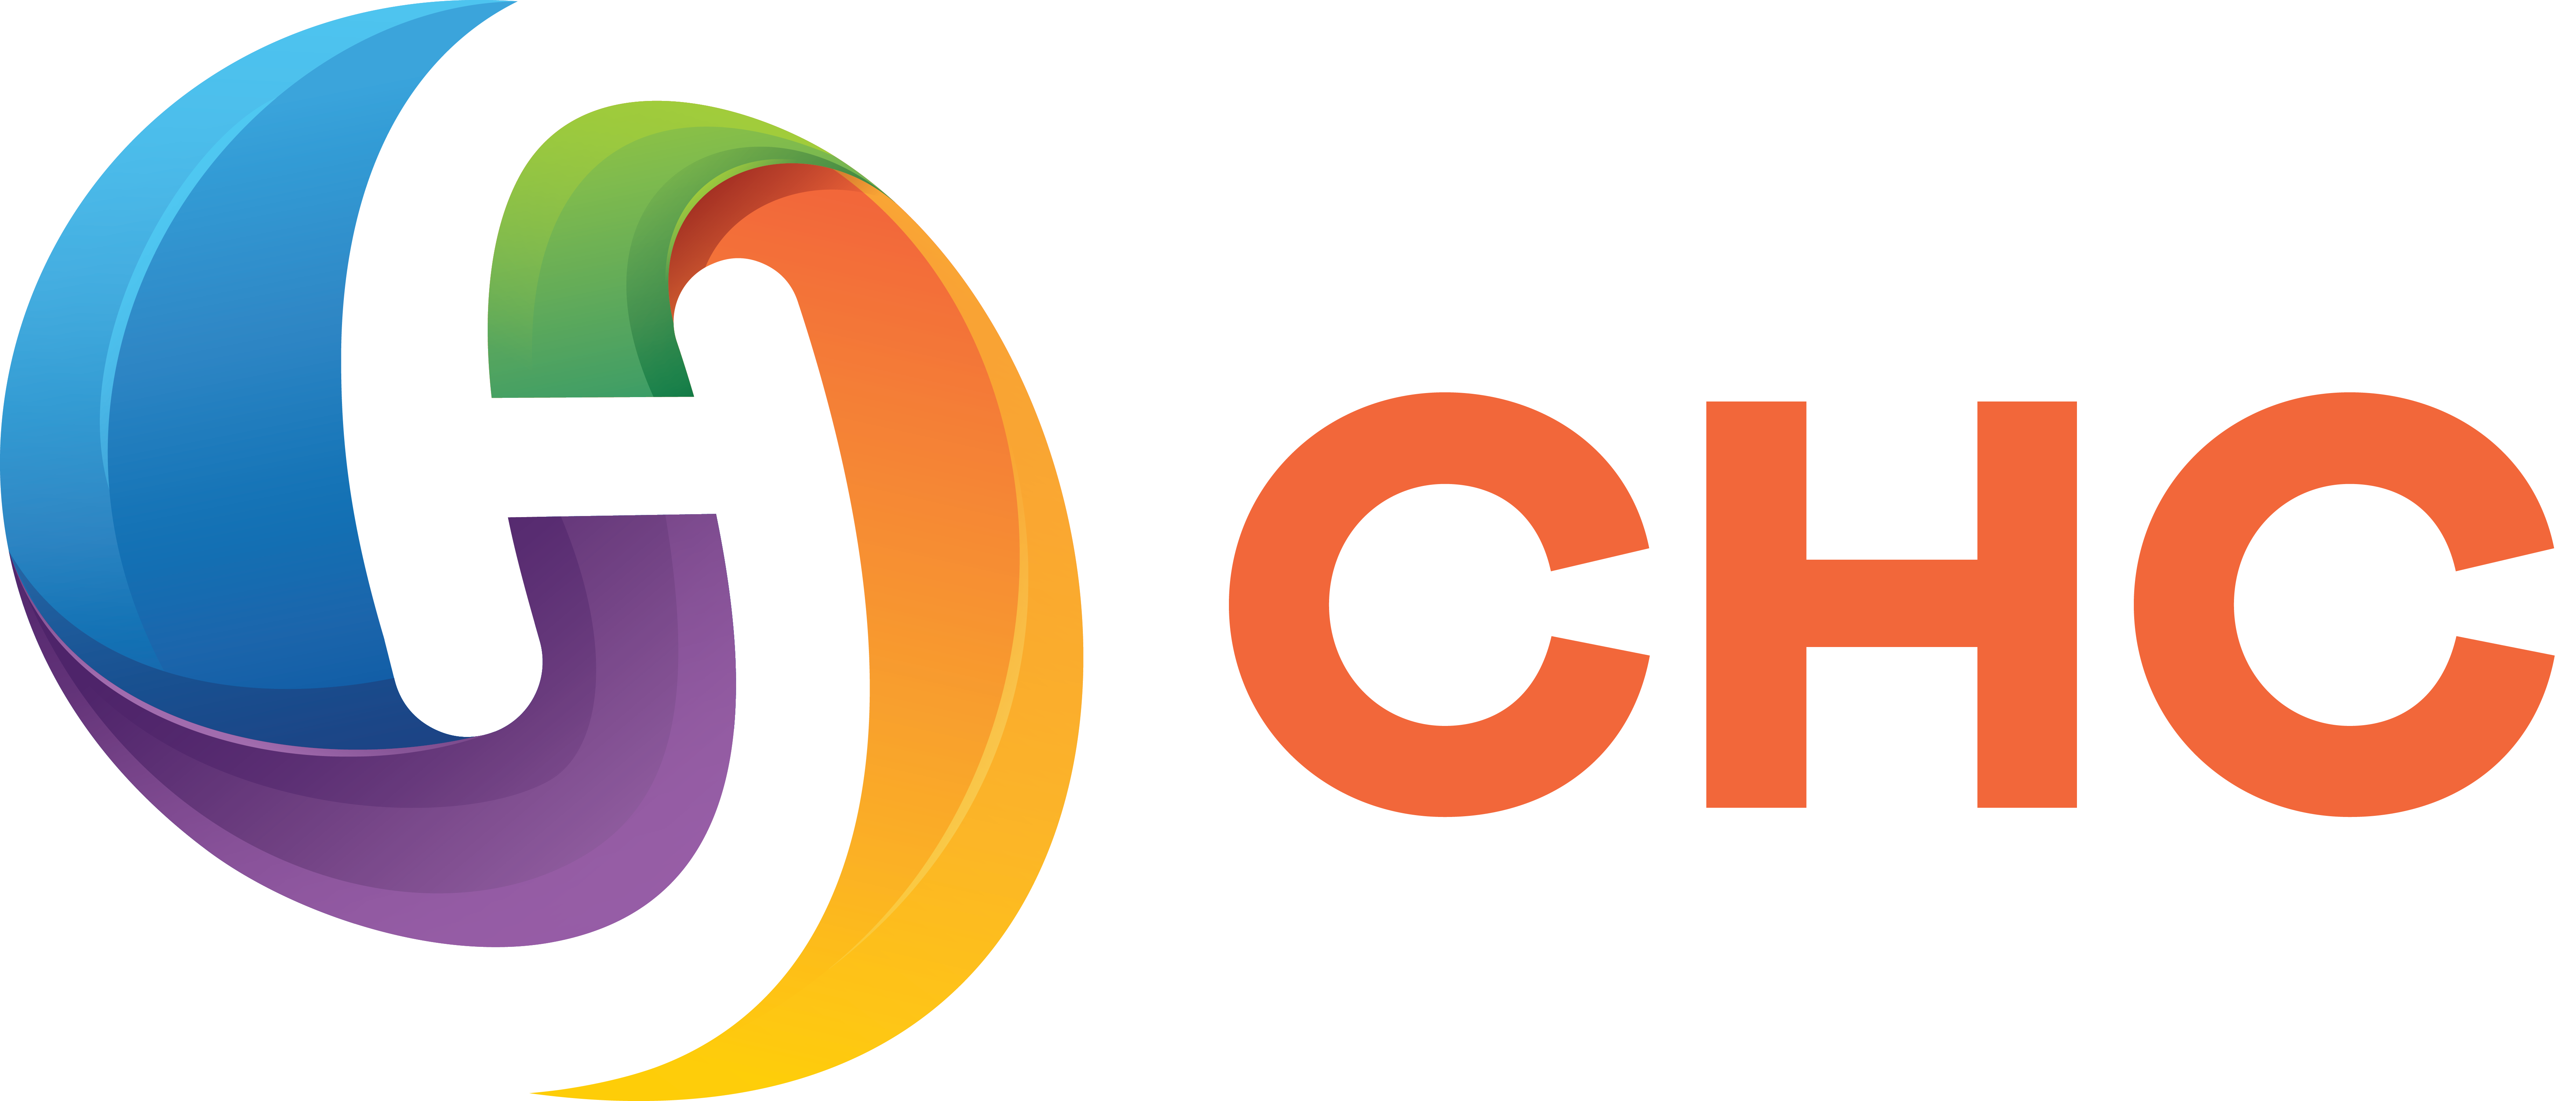 CHC logo